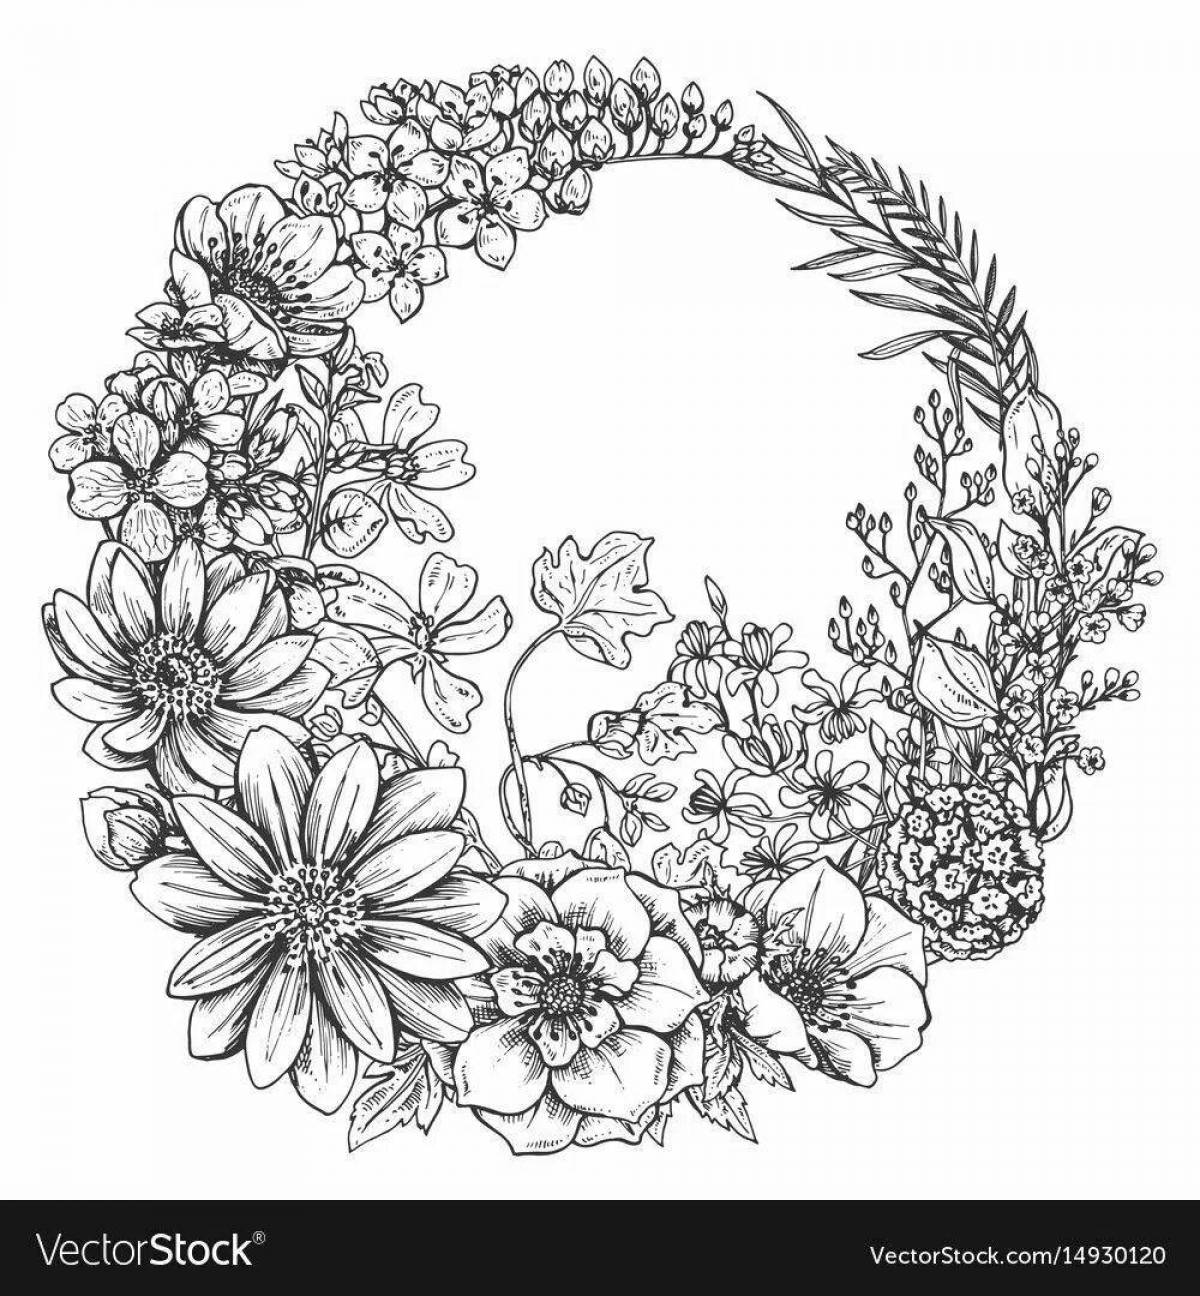 Coloring page joyful wreath of flowers